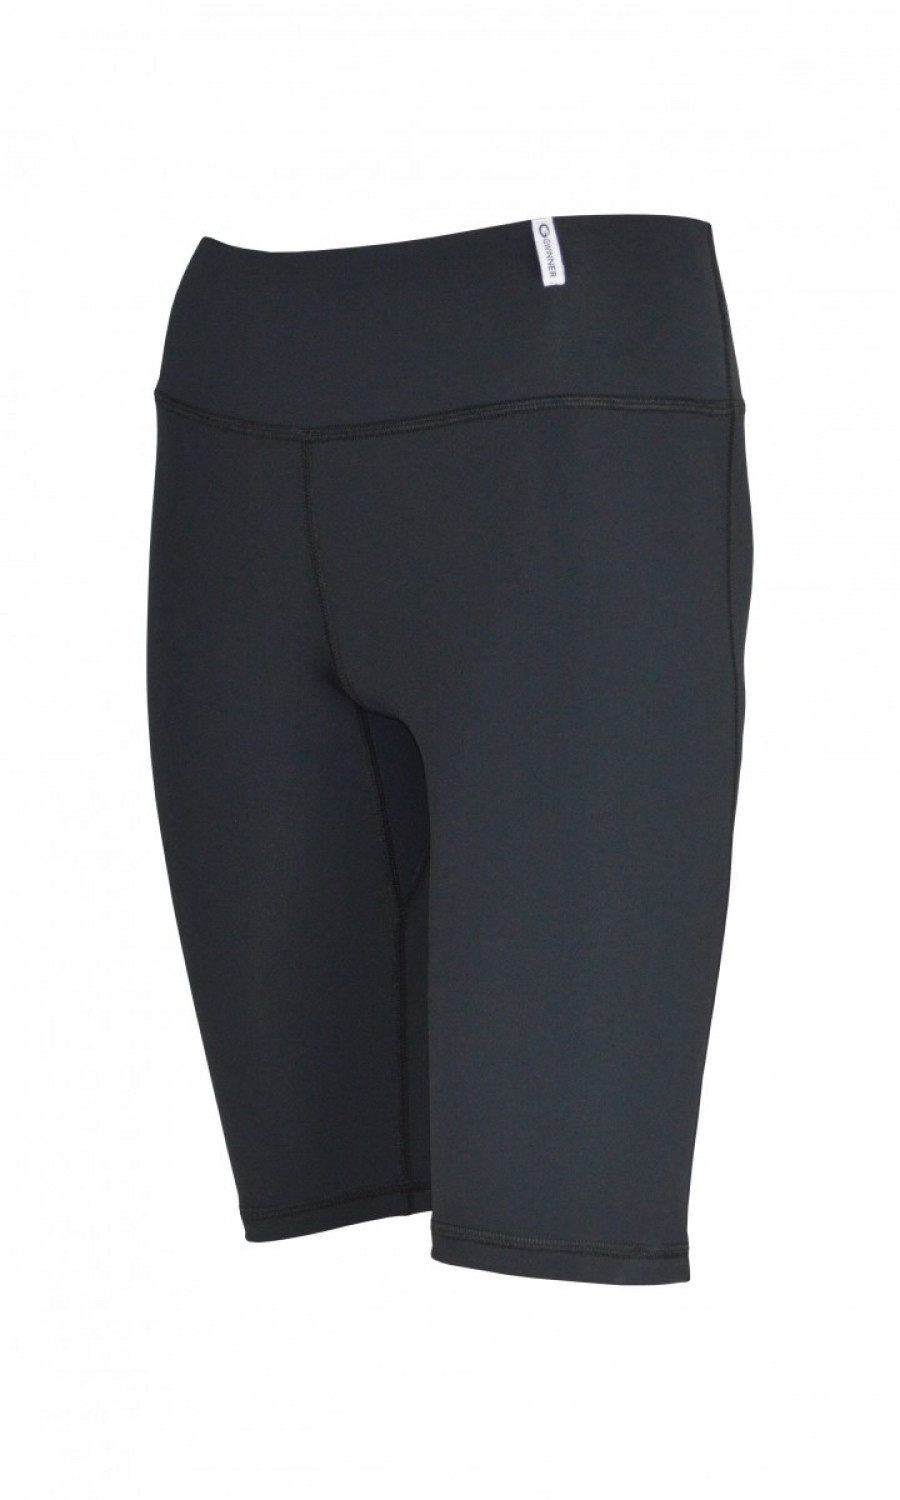 Fitness šortky Slimming shorts - WINNER černá XL